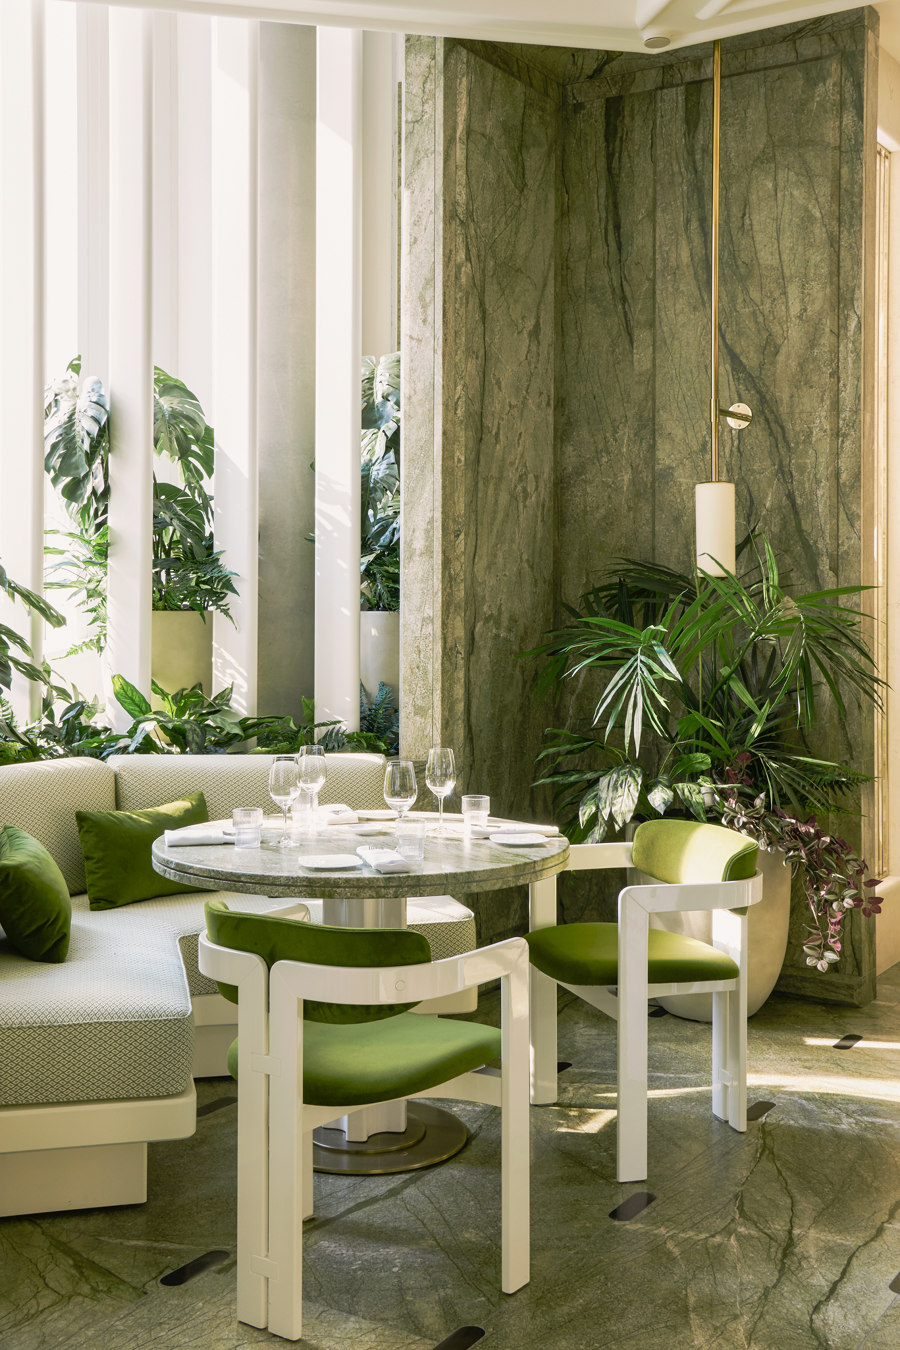 Le Jardinier by Joseph Dirand Architecture | Restaurant interiors